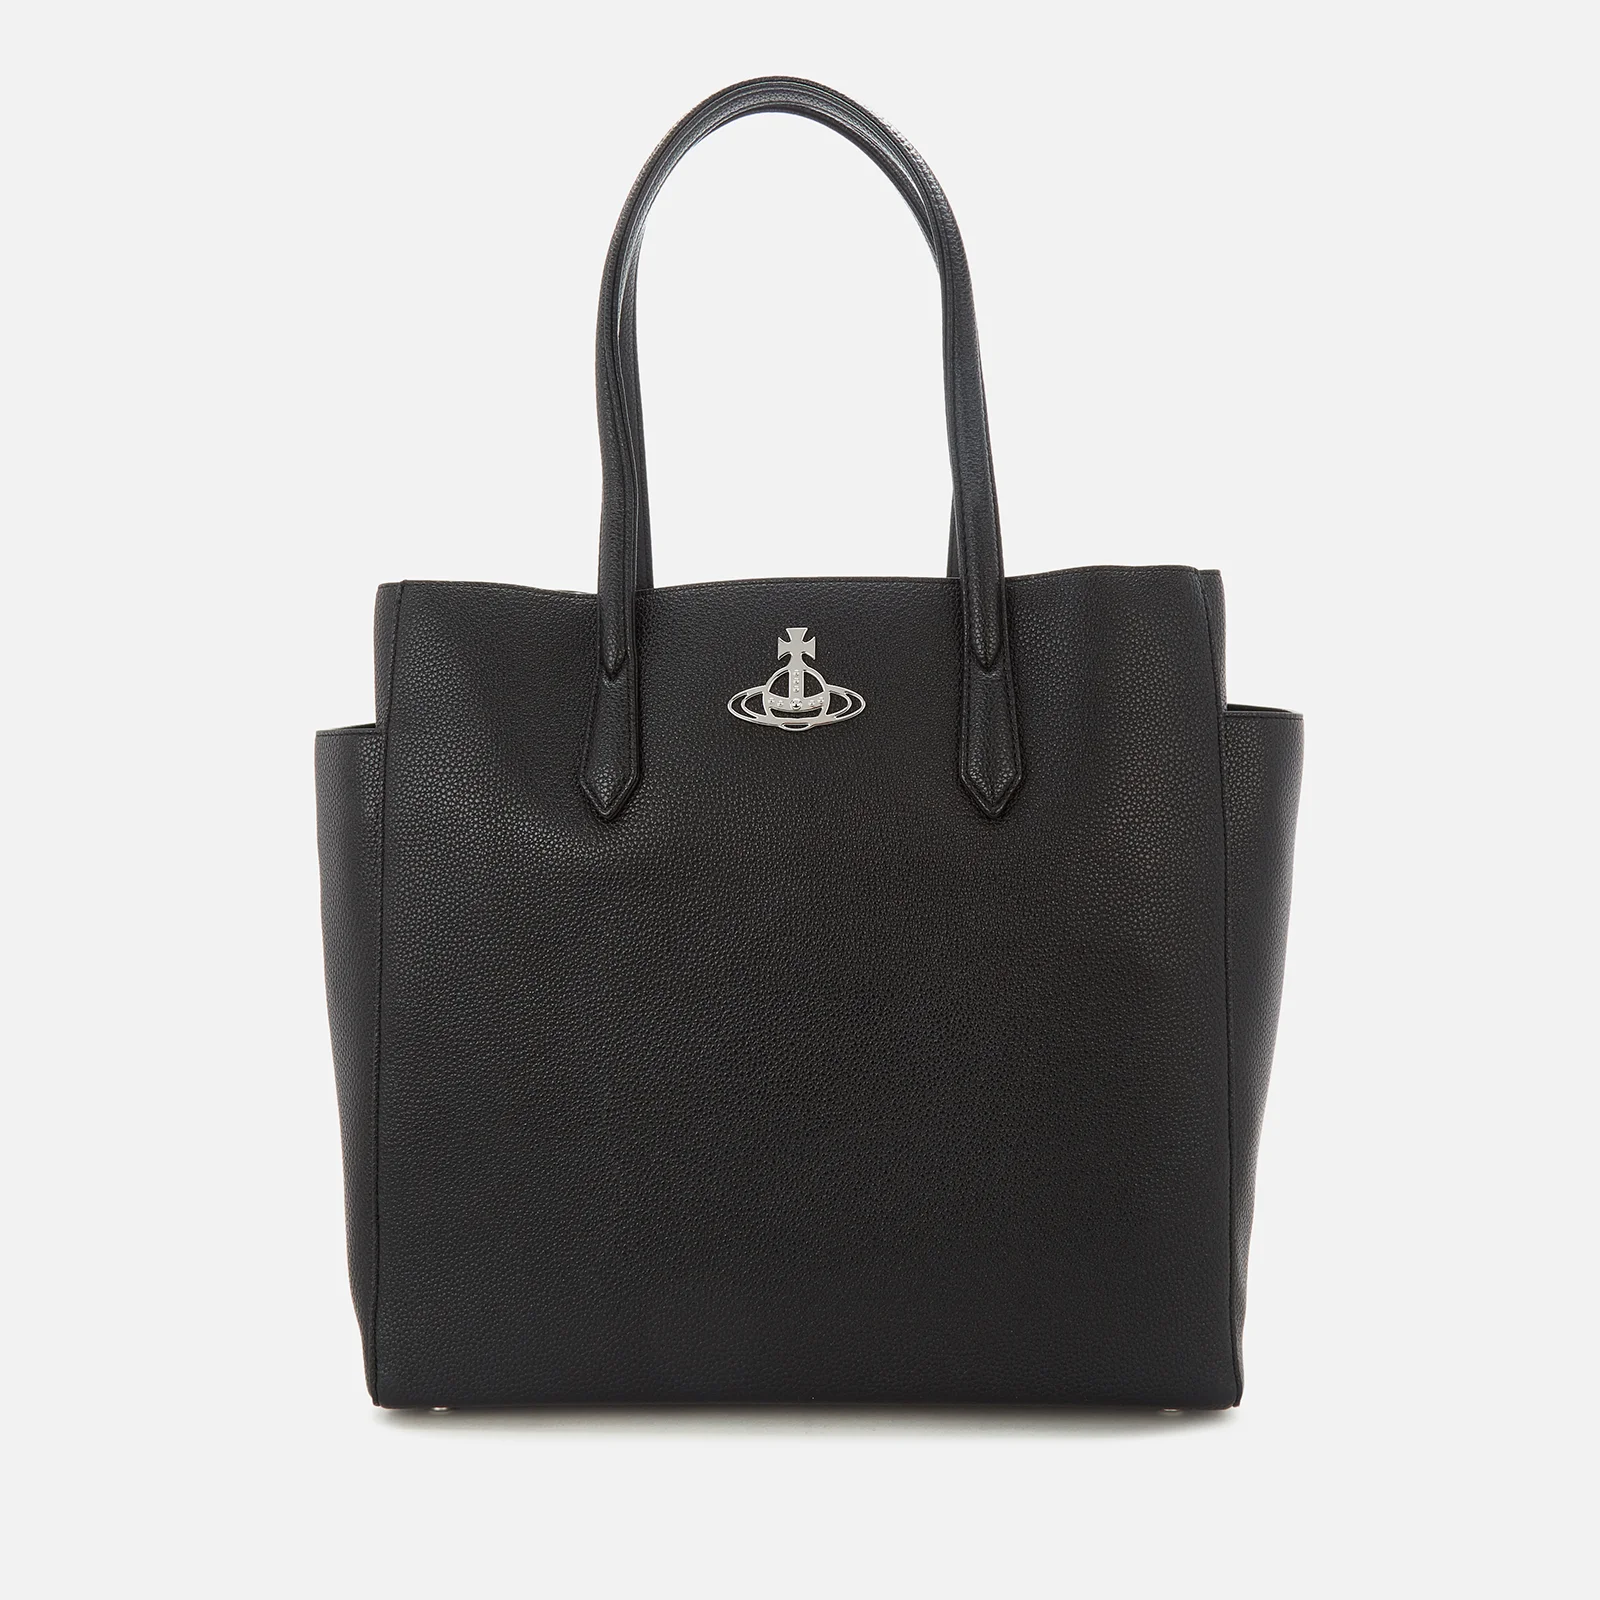 Vivienne Westwood Women's Johanna Large Shopper Bag - Black Image 1